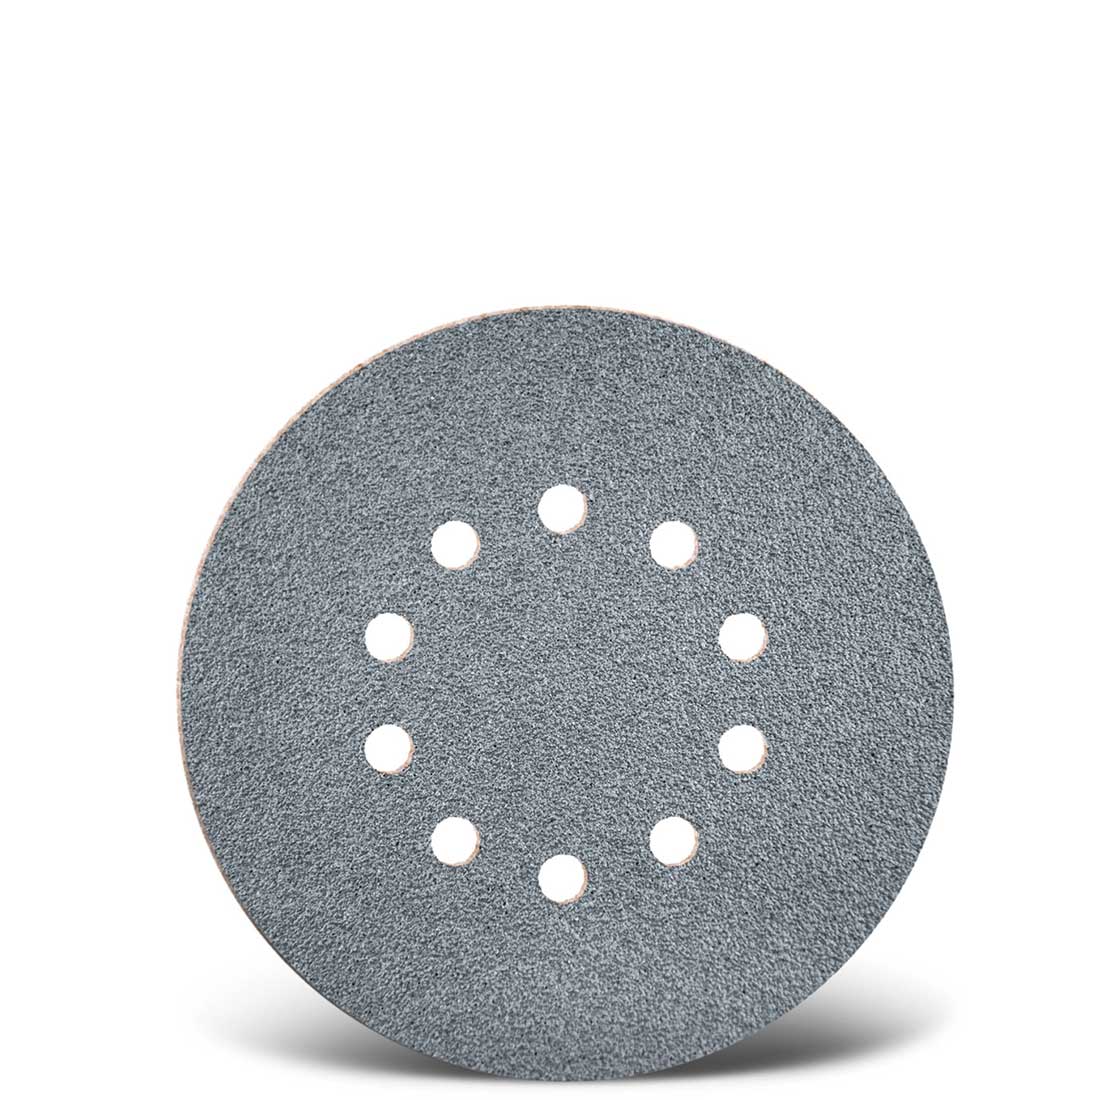 Dischi abrasivi velcrati MENZER per levigatrici per muri, G40–400, Ø 225 mm / 10 fori / corindone semi-friabile con stearato